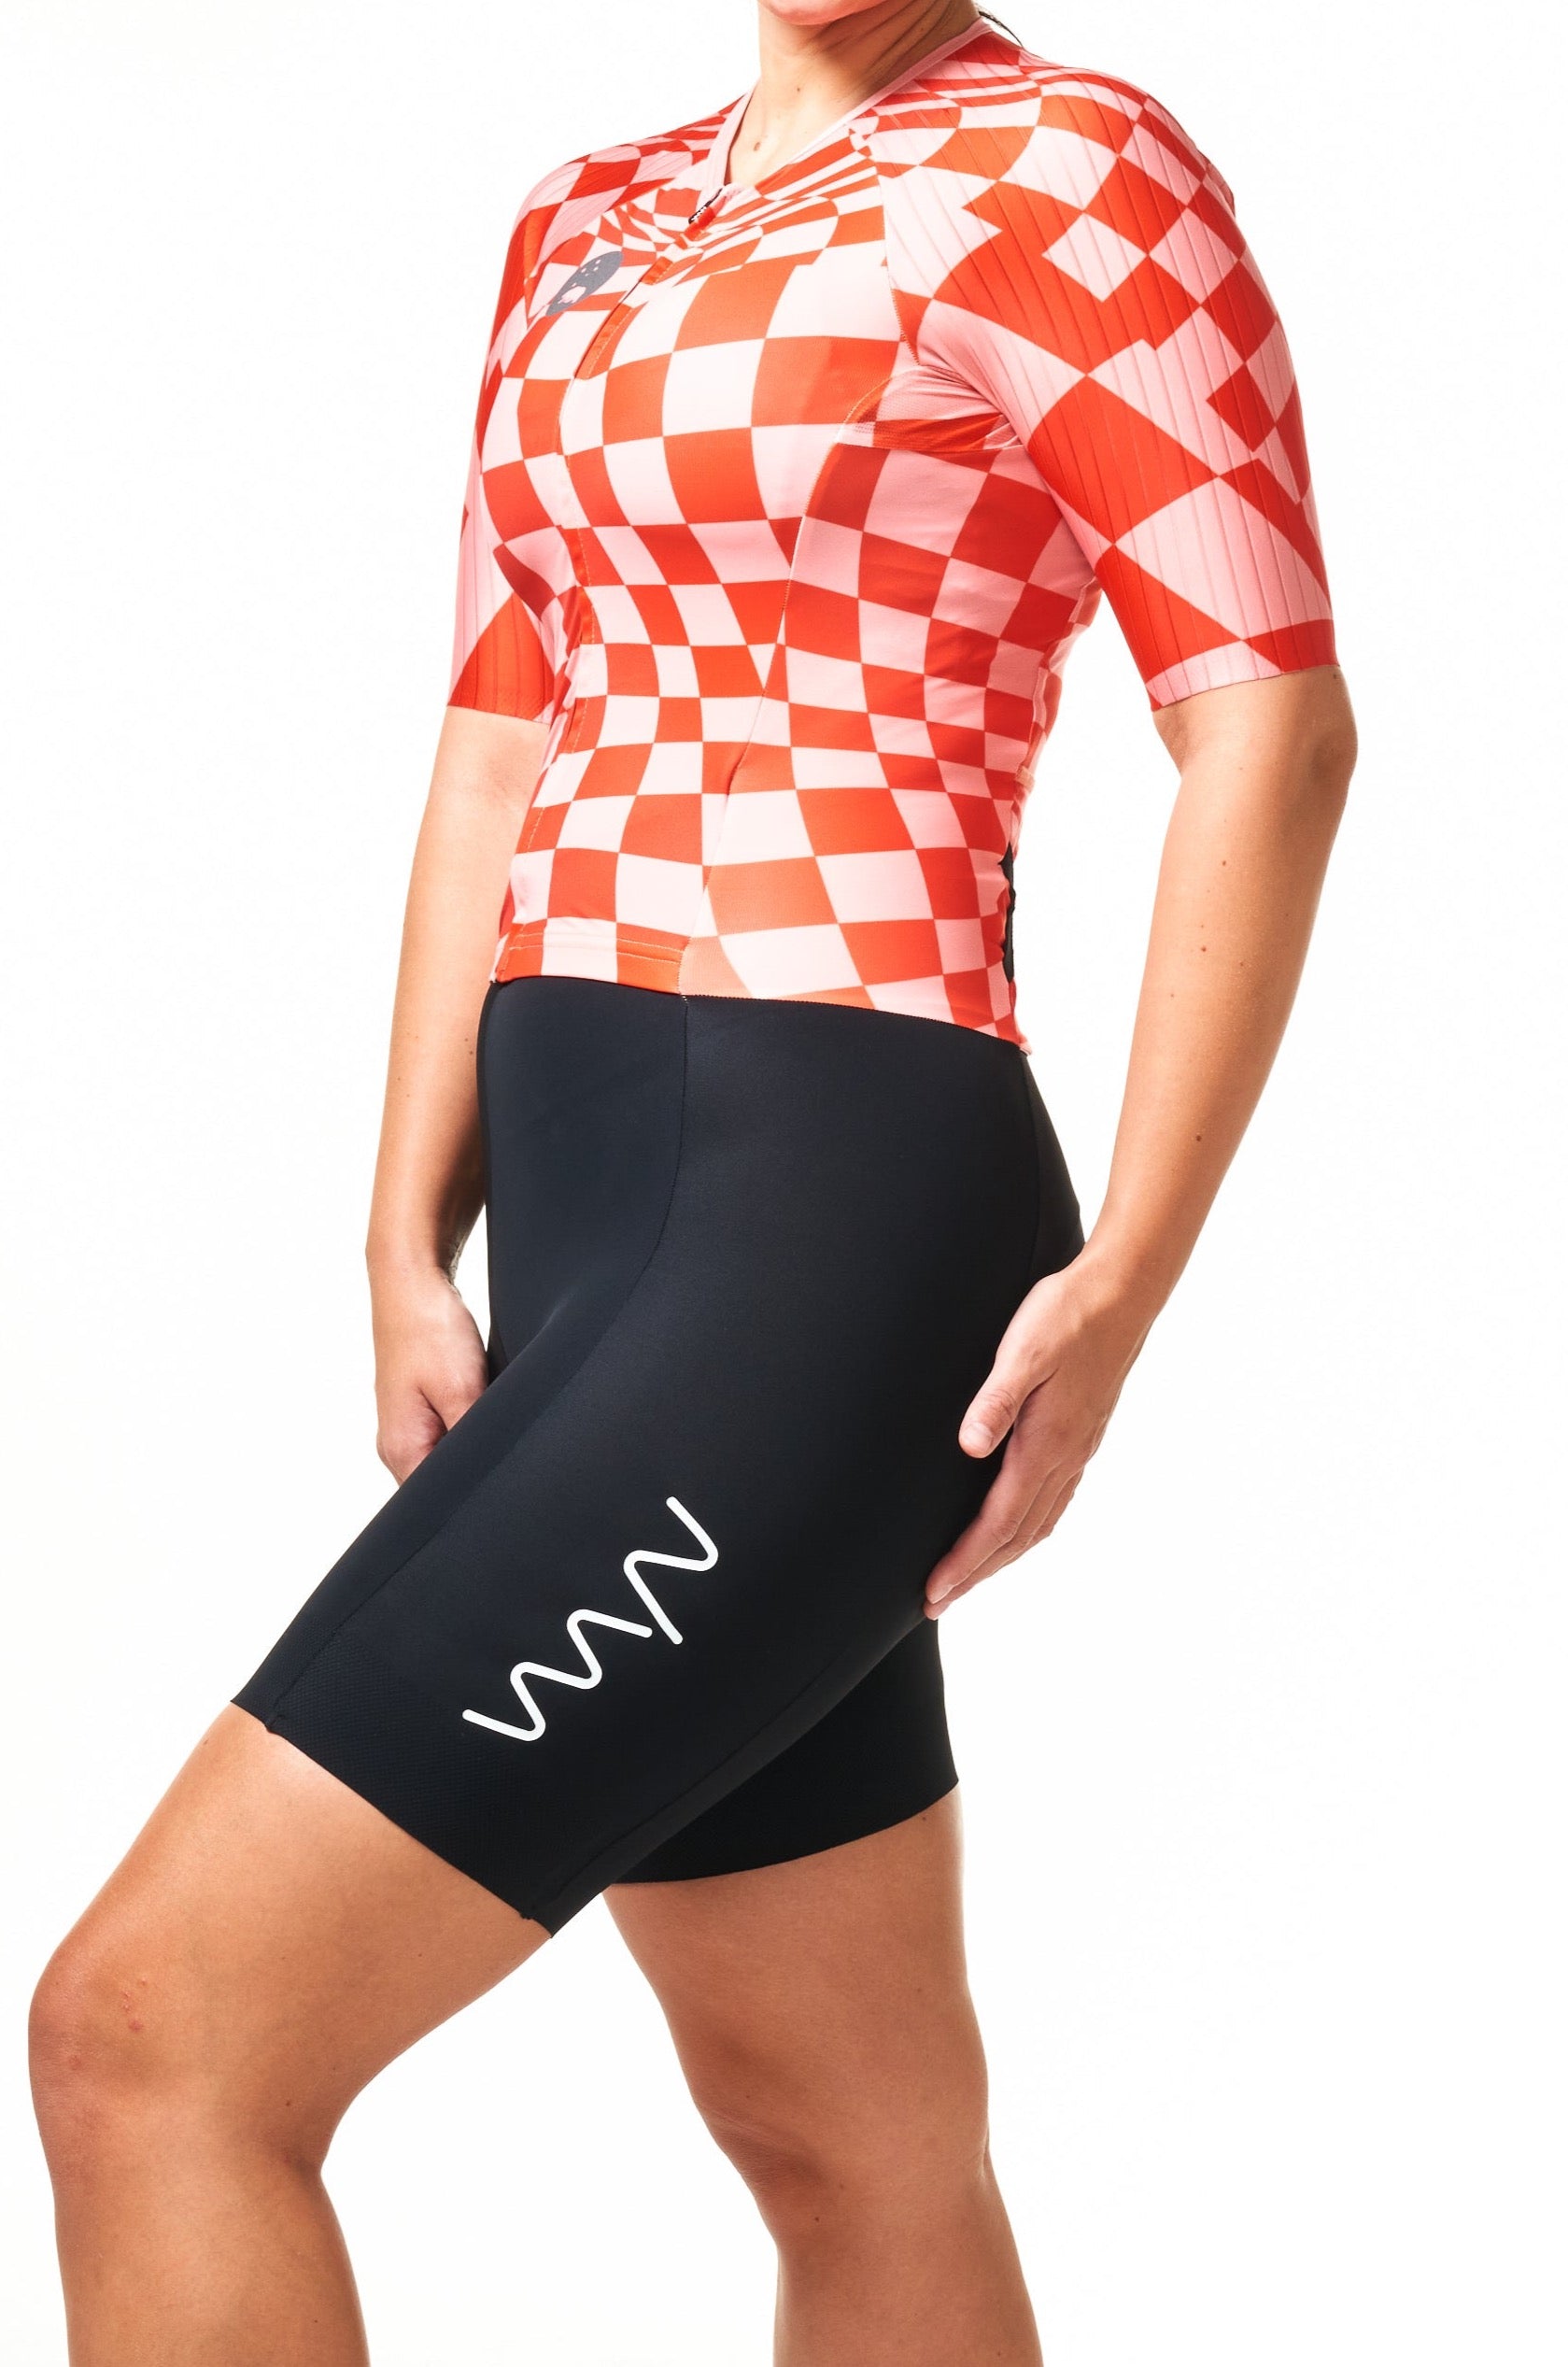 women's check mate high velocity triathlon suit - scarlet check